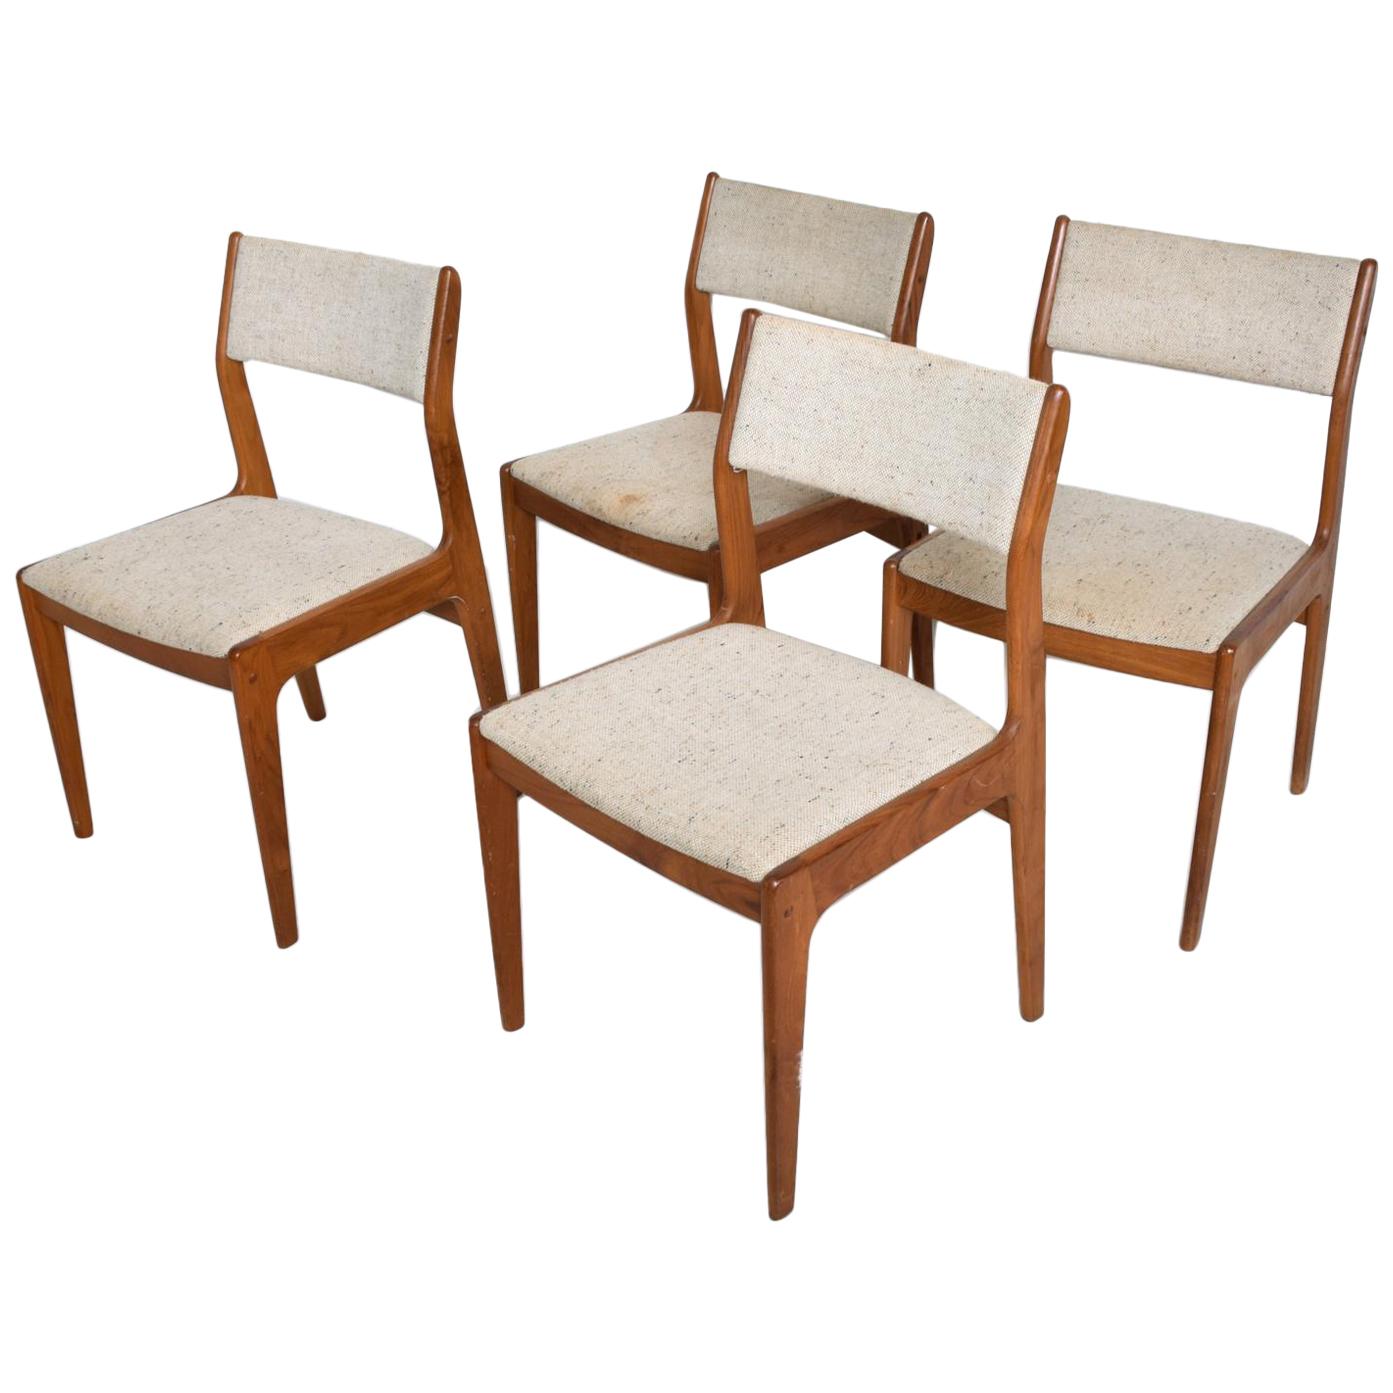 Midcentury Danish Modern Benny Linden Teak Dining Chairs, Set of 4